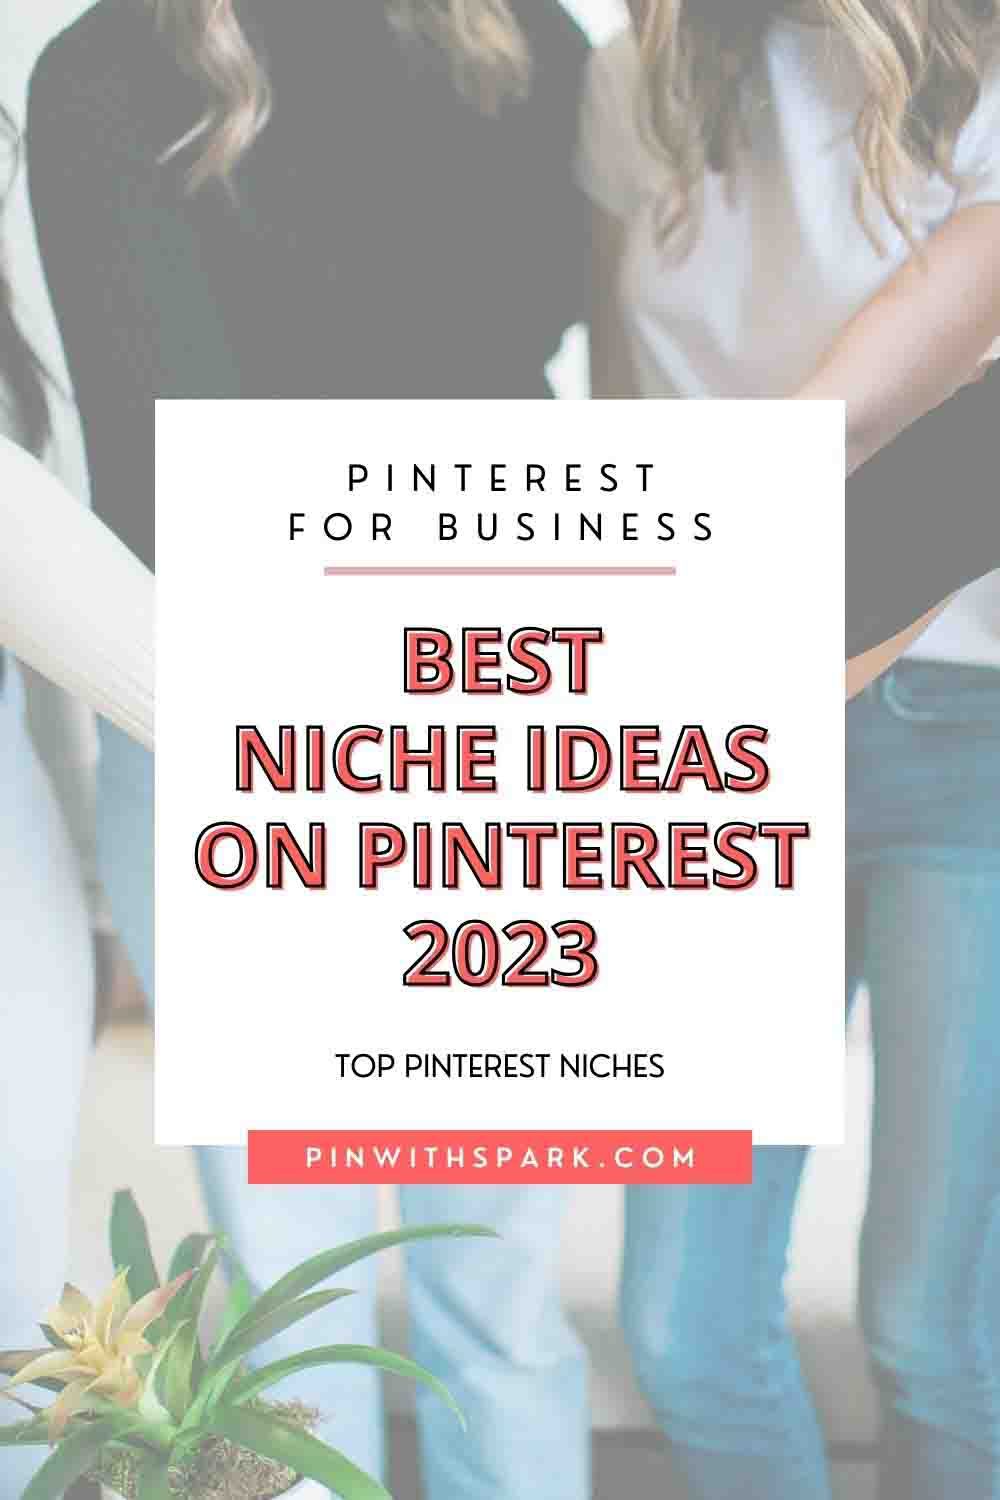 Best niche ideas on Pinterest 2023 text overlay pinwithspark.com